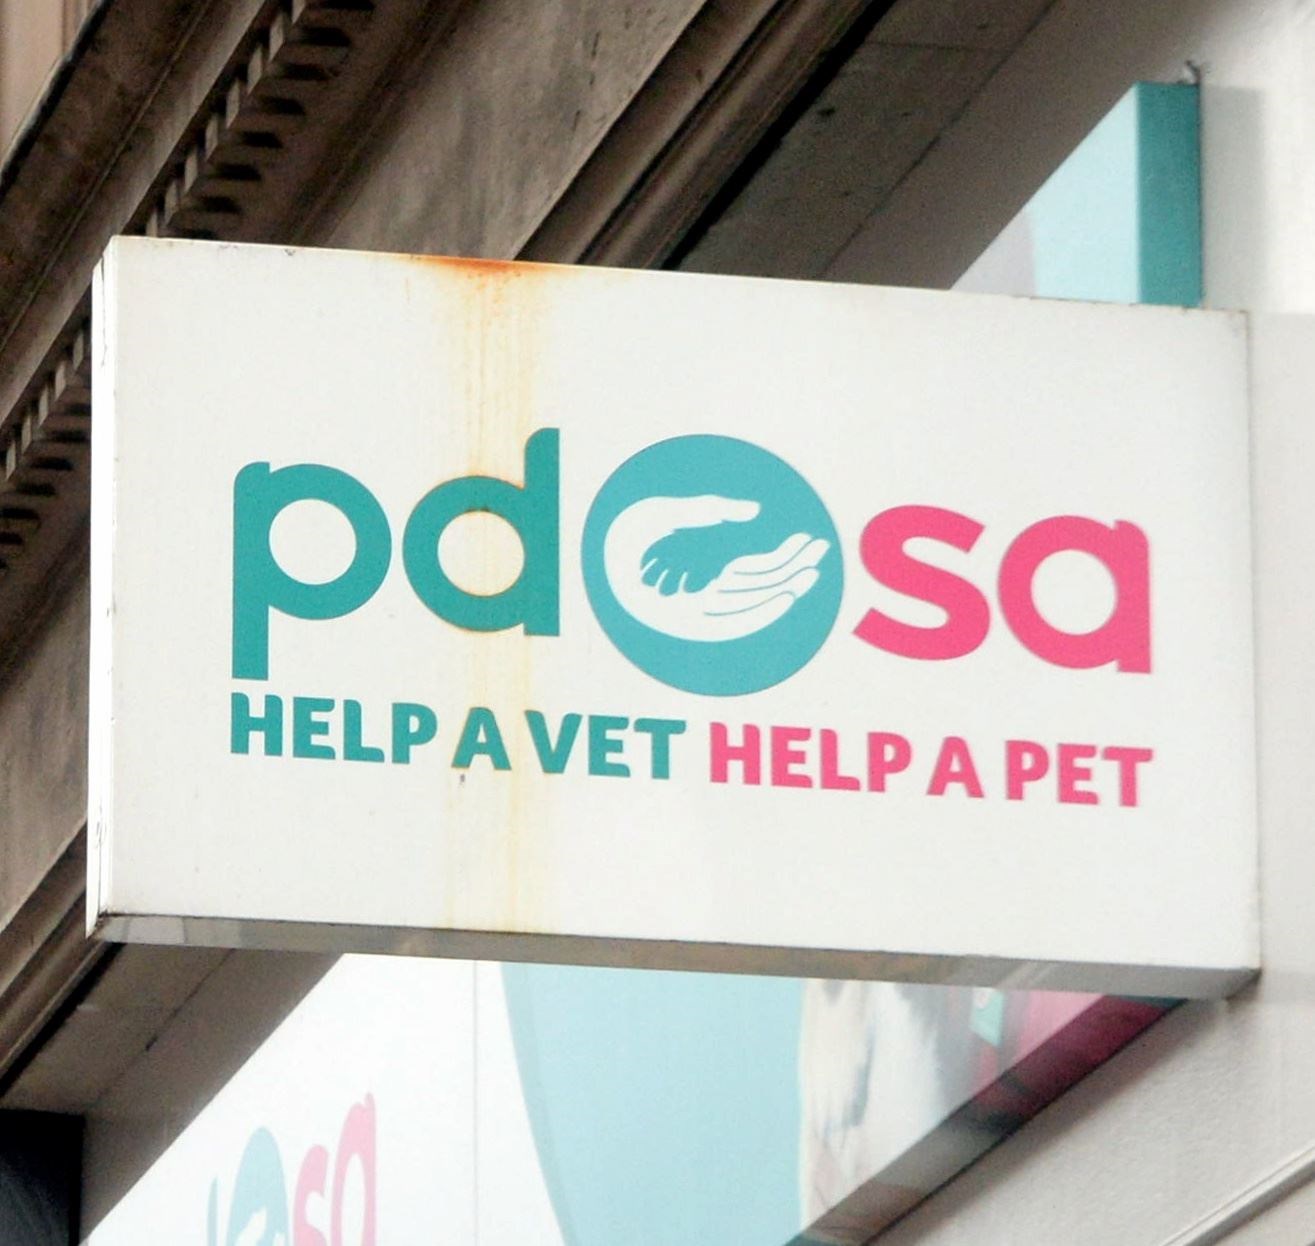 PDSA shop at Queensgate, Inverness. Picture: James Mackenzie.